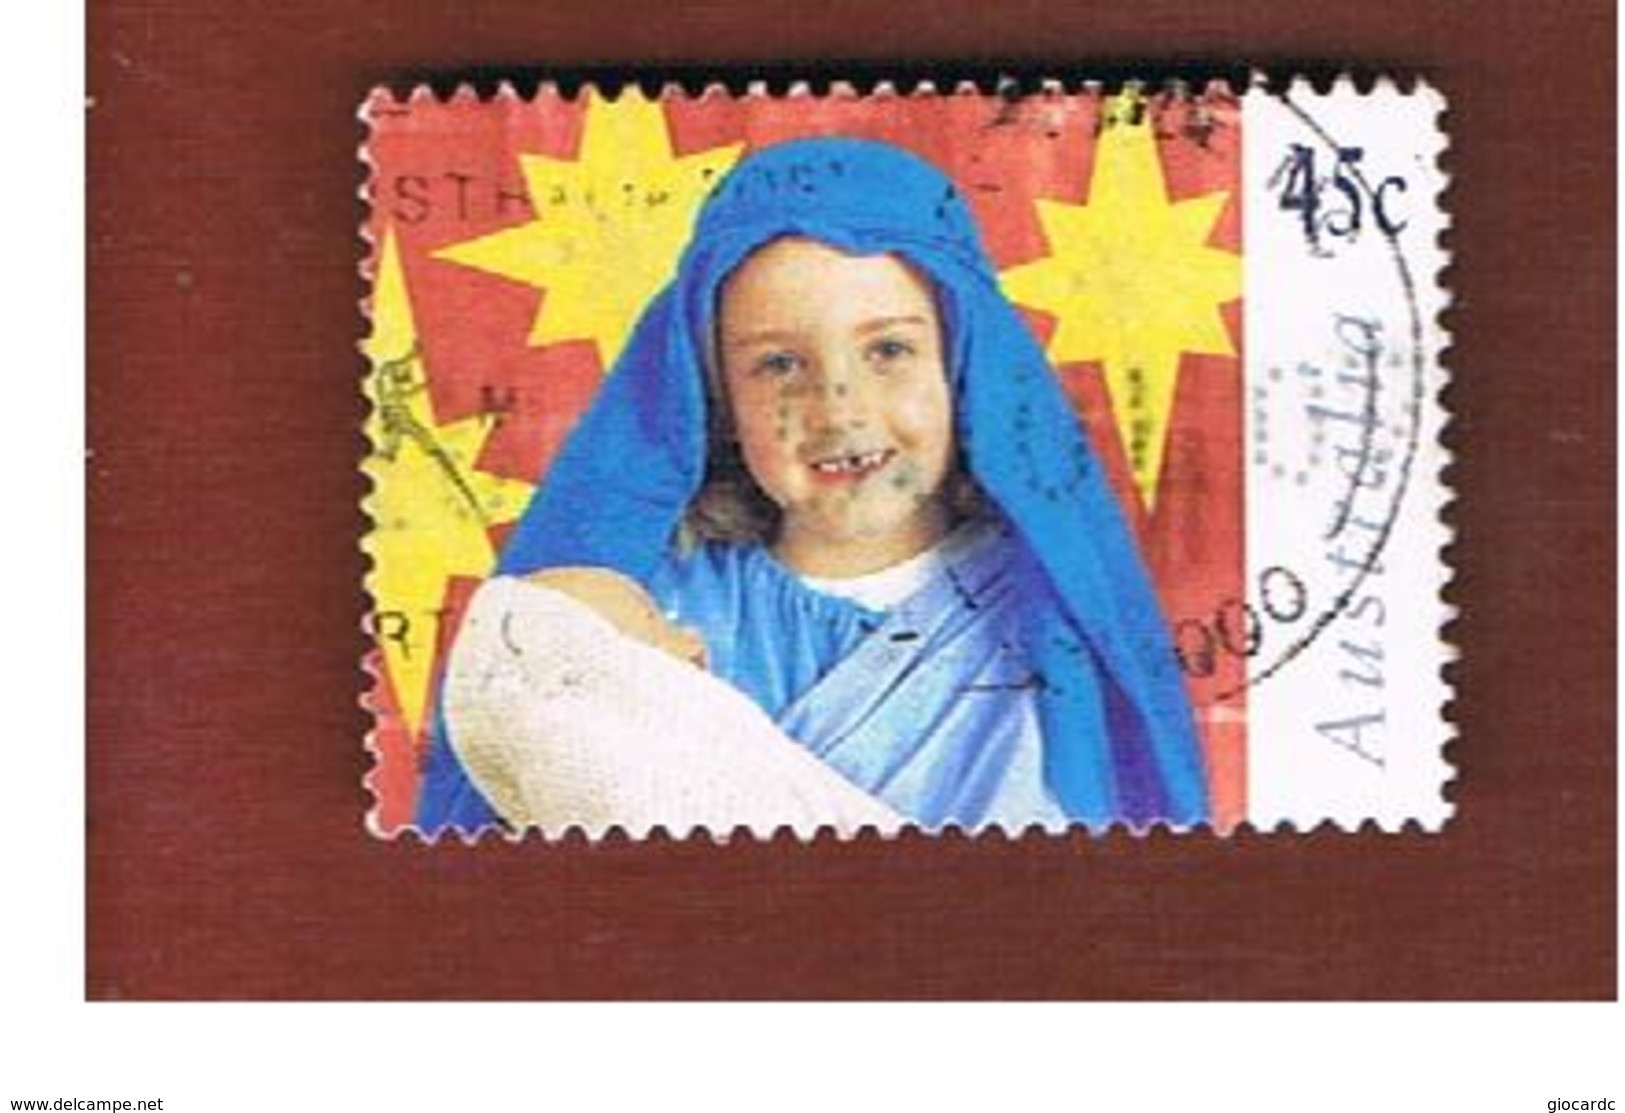 AUSTRALIA  -  SG 1724 -      1997 CHRISTMAS           -       USED - Used Stamps